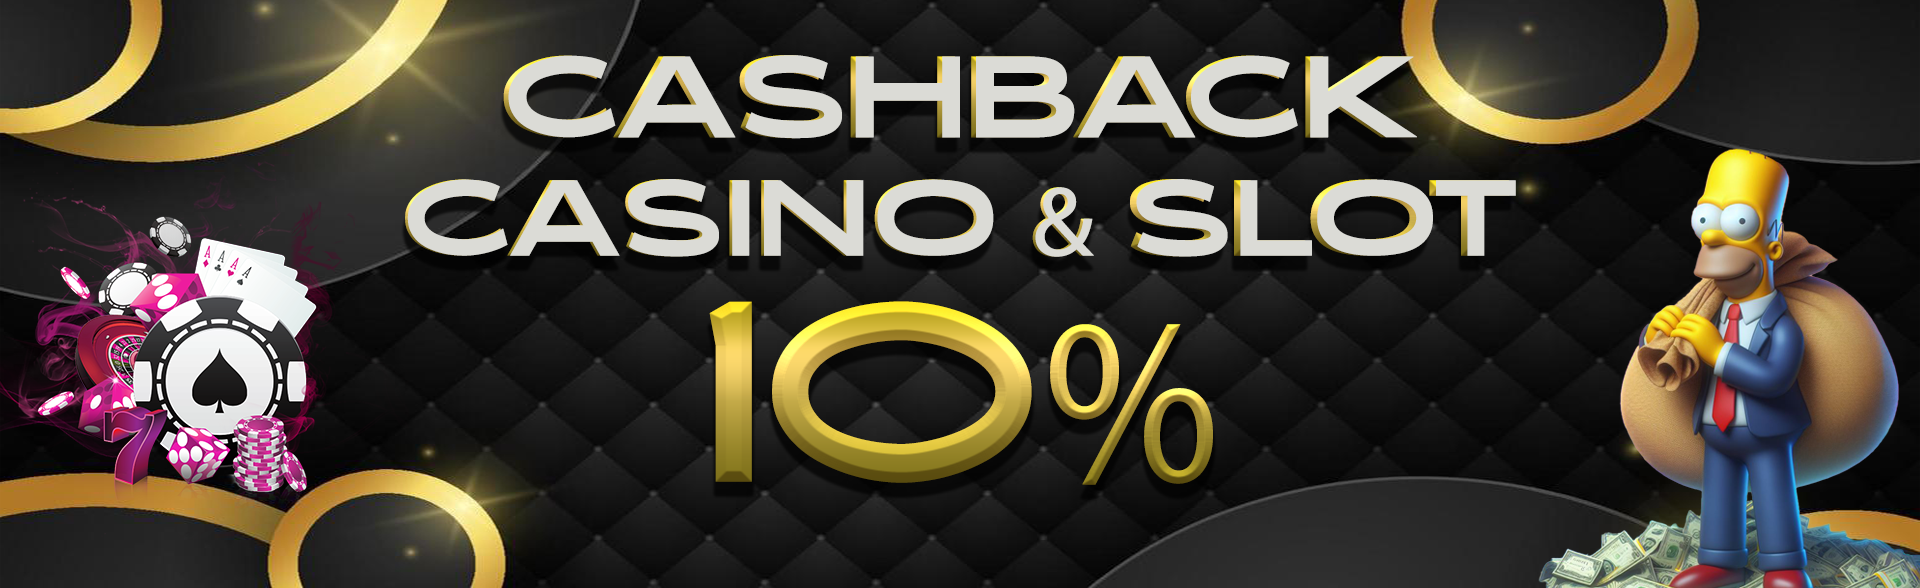 Cashback Casino & Slot 10 %